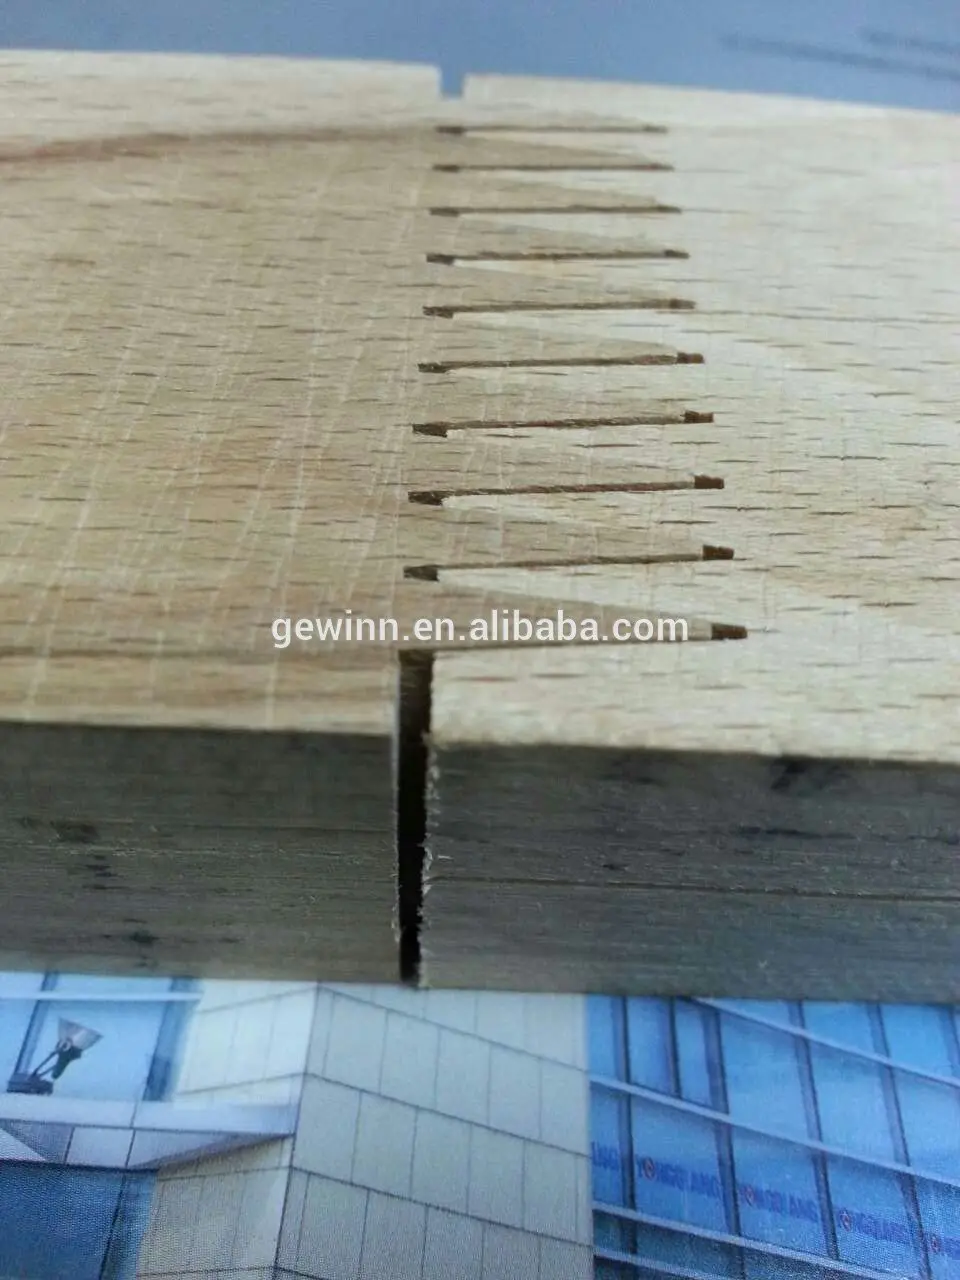 Gewinn Brand cnc carving industrial woodworking tools wood supplier